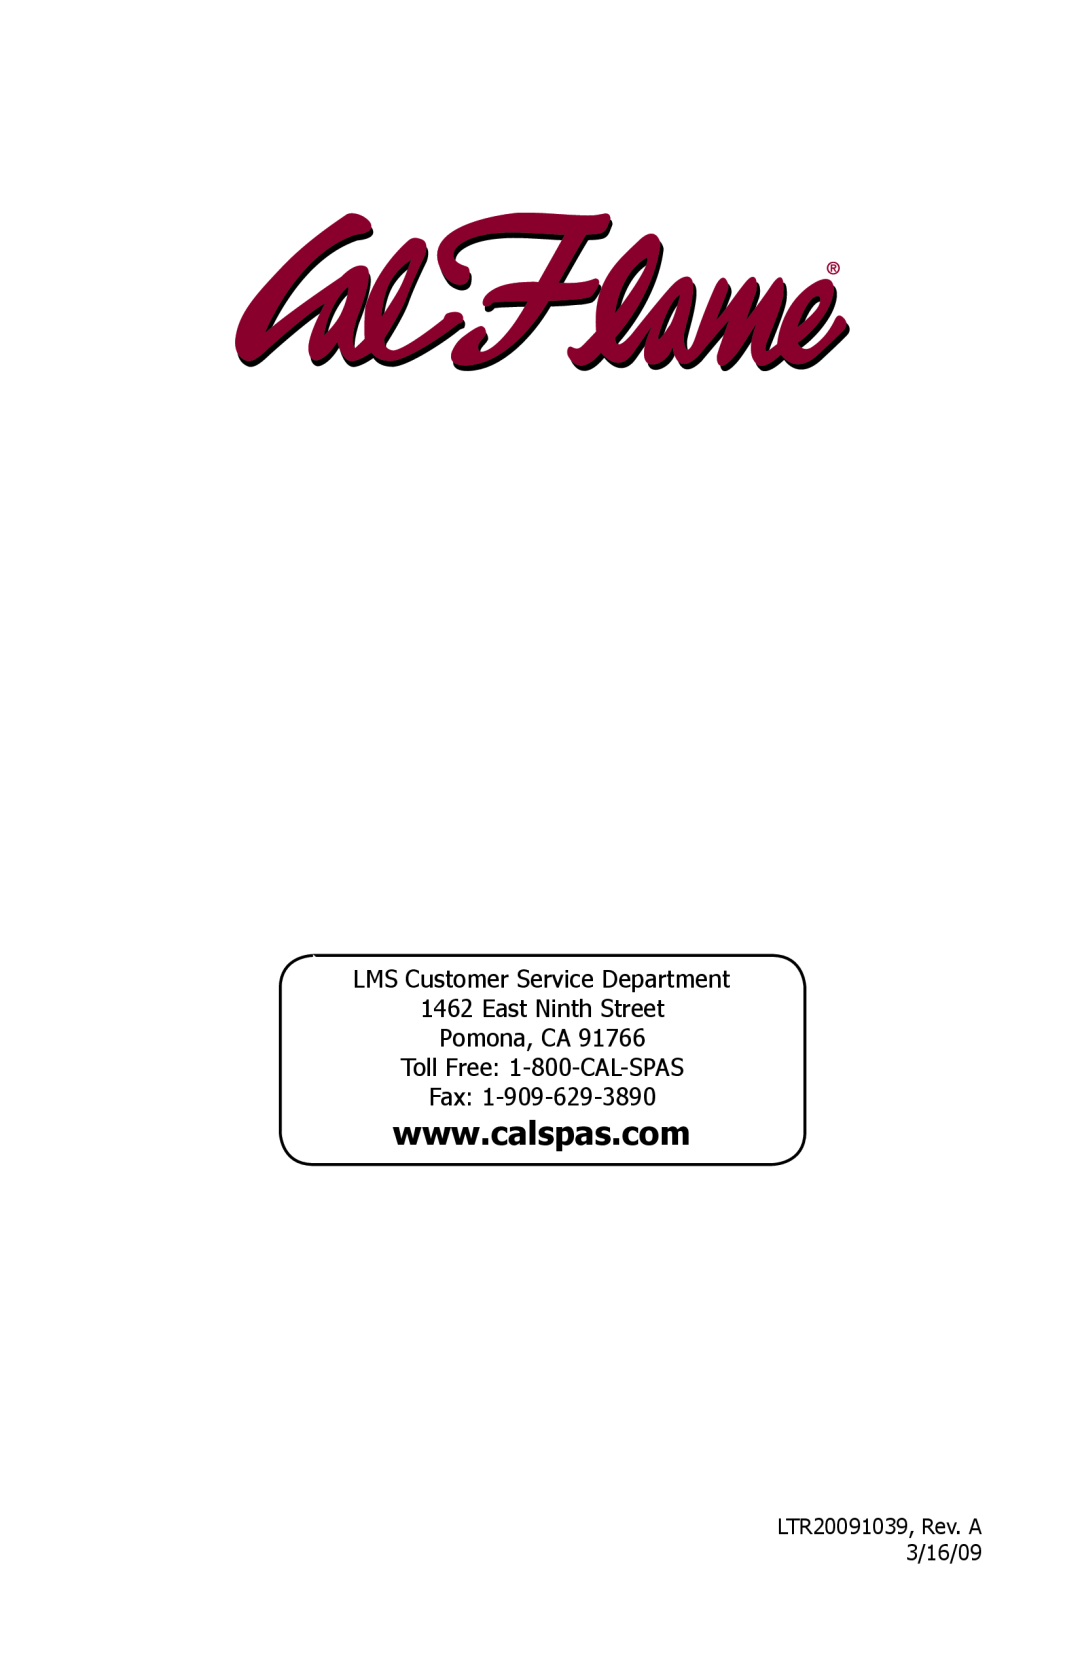 Cal Flame manual LMS Customer Service Department, East Ninth Street Pomona, CA, LTR20091039, Rev. A 3/16/09 